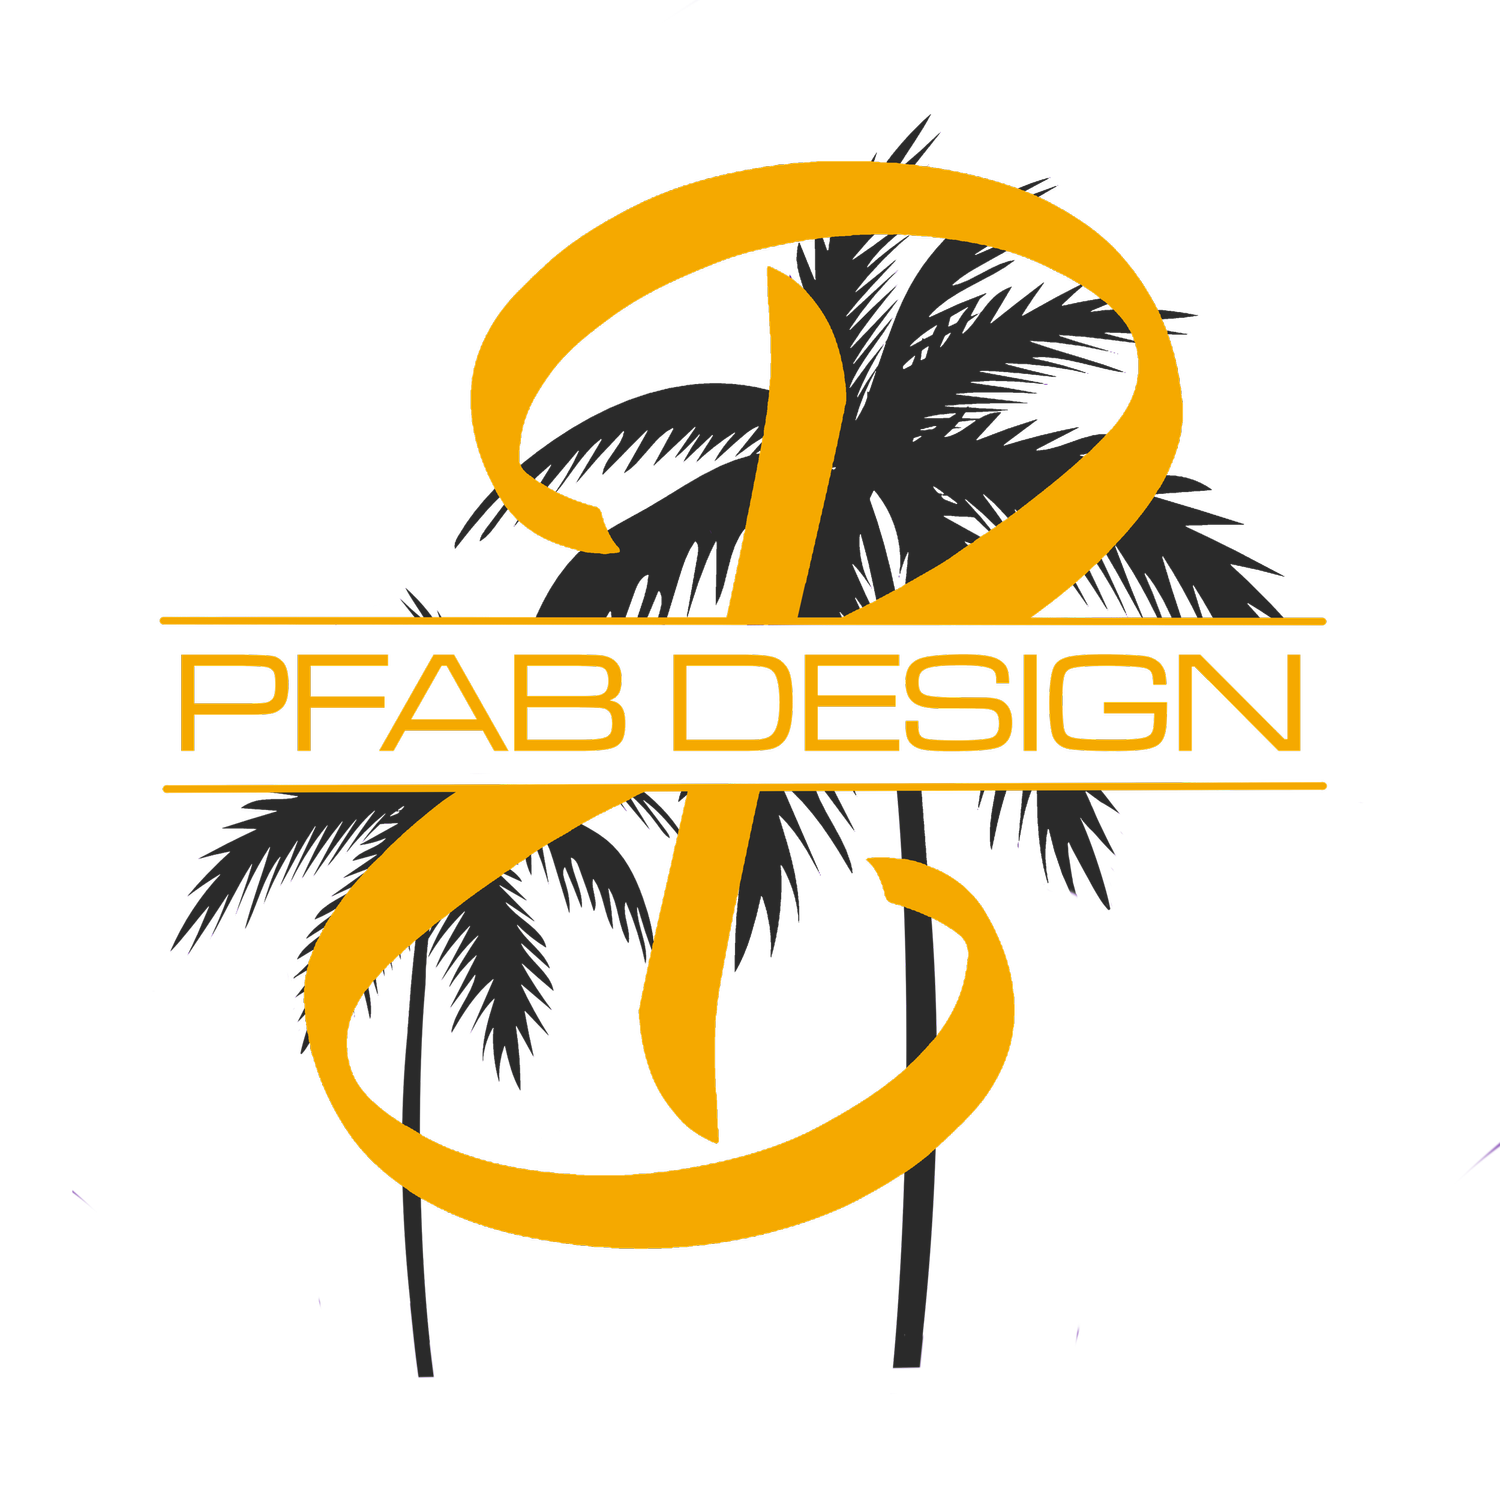 PfabDesign